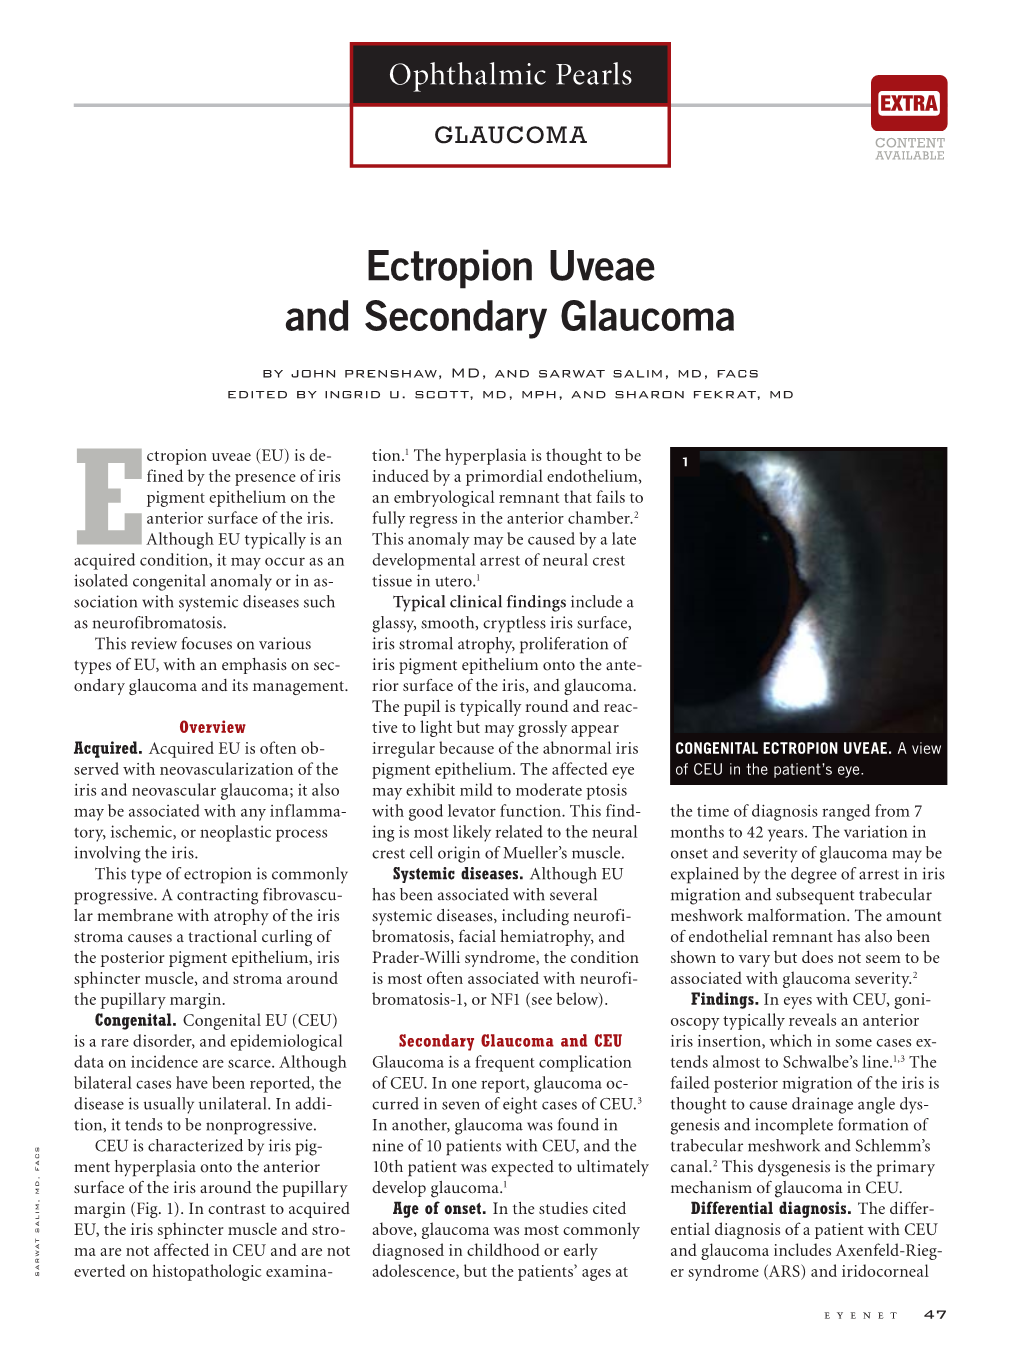 Ectropion Uveae and Secondary Glaucoma